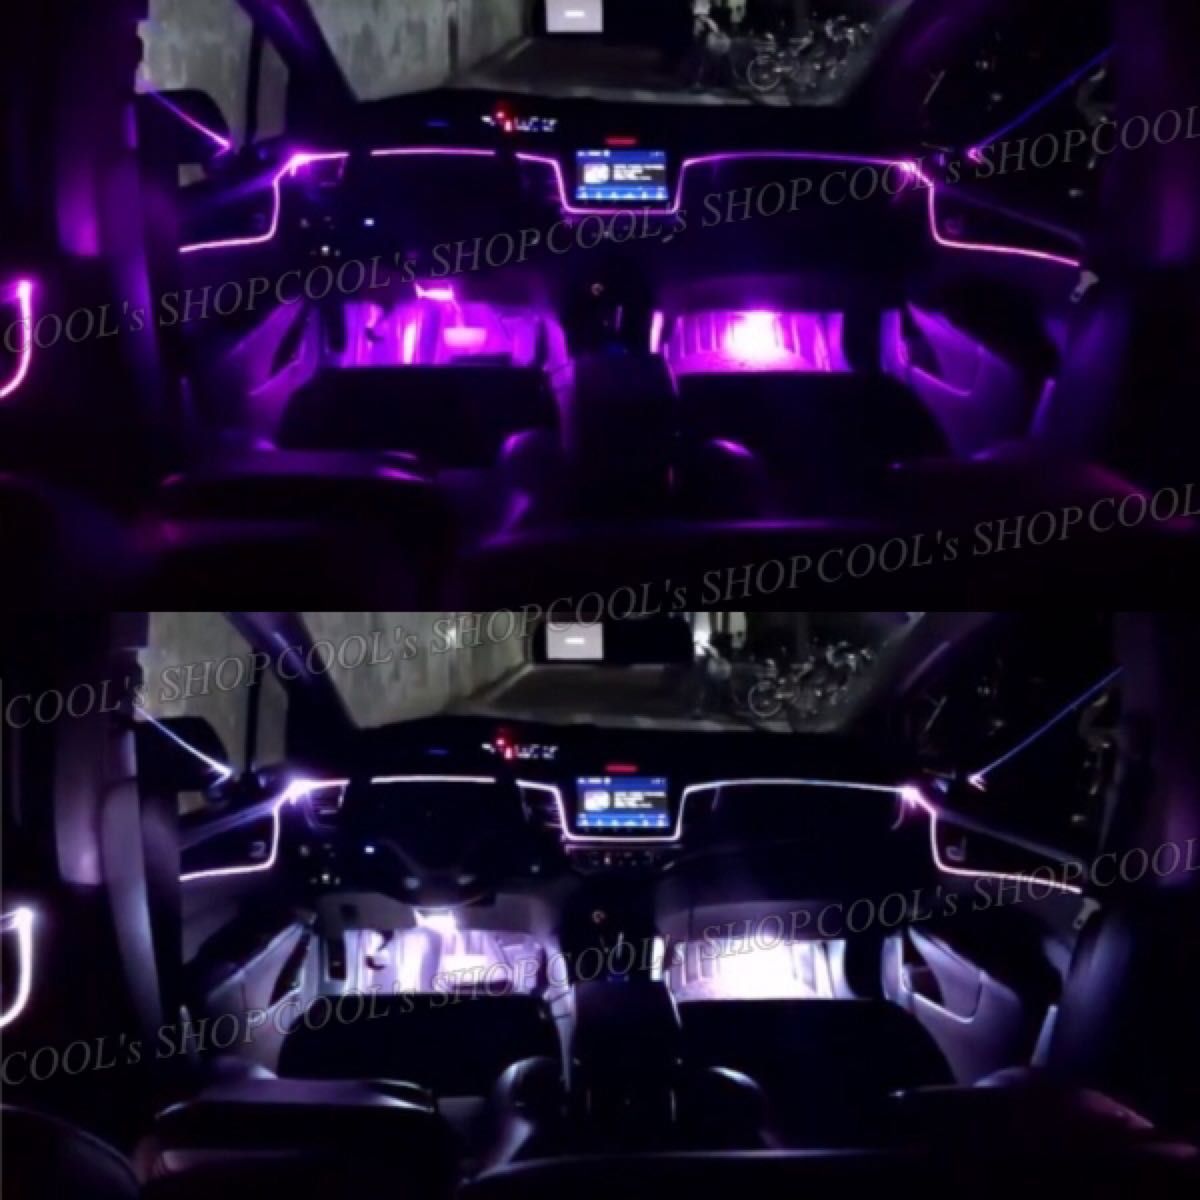 V アンビエントライト ネオンワイヤー ELライン LEDチューブ 間接照明 紫 リブ付きファイバー パープル カー用品 車用